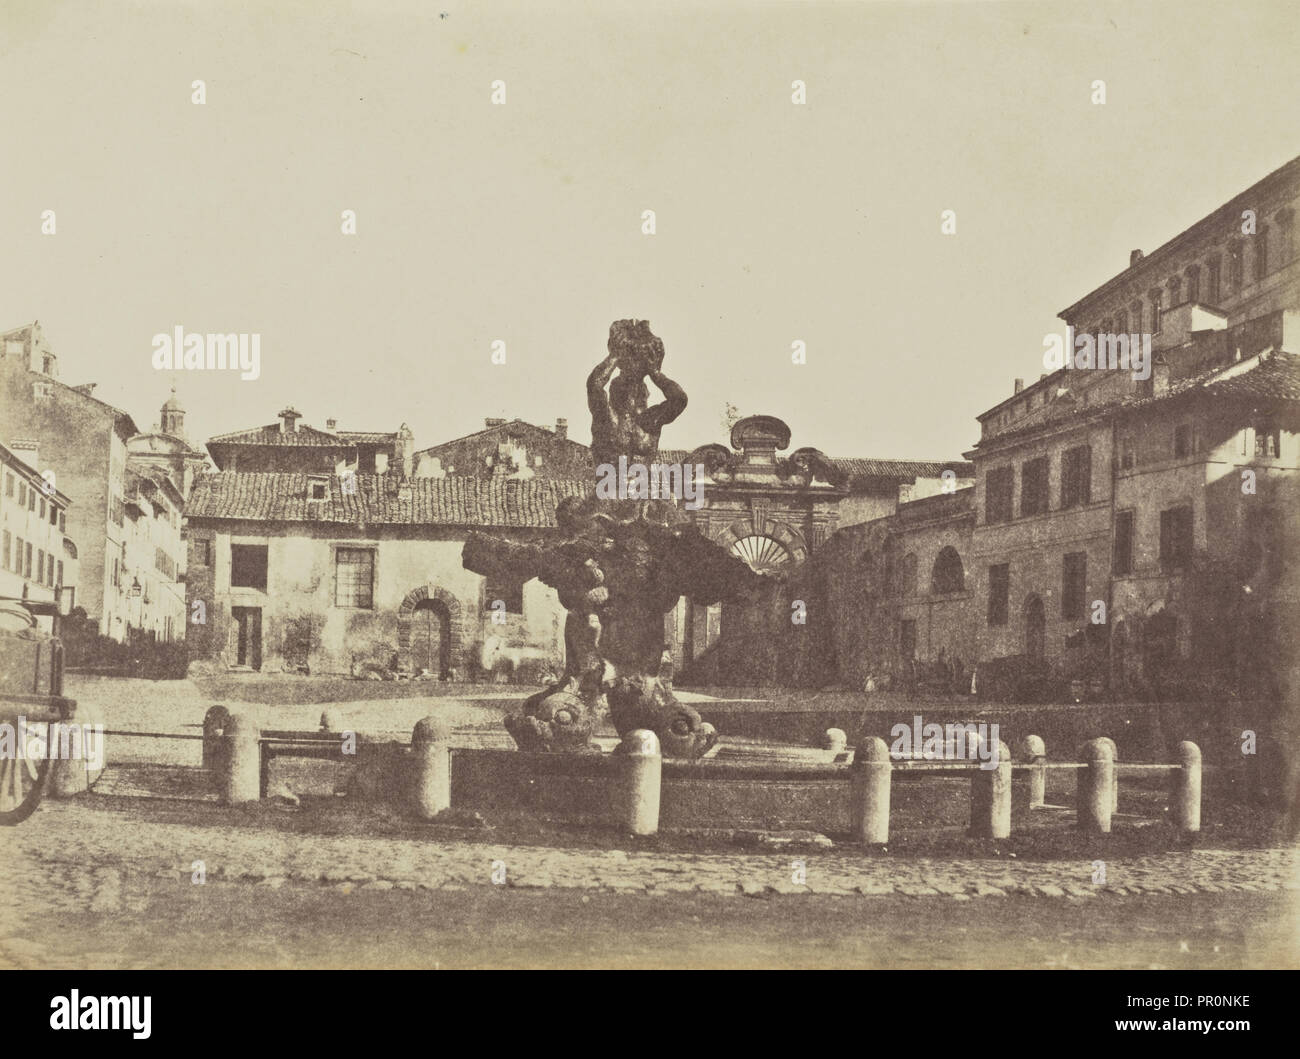 Fontana del Tritone; Mrs. Jane St. John, British, 1803 - 1882, Rome, Italy;  1856 - 1859; Albumen silver print from a paper Stock Photo - Alamy